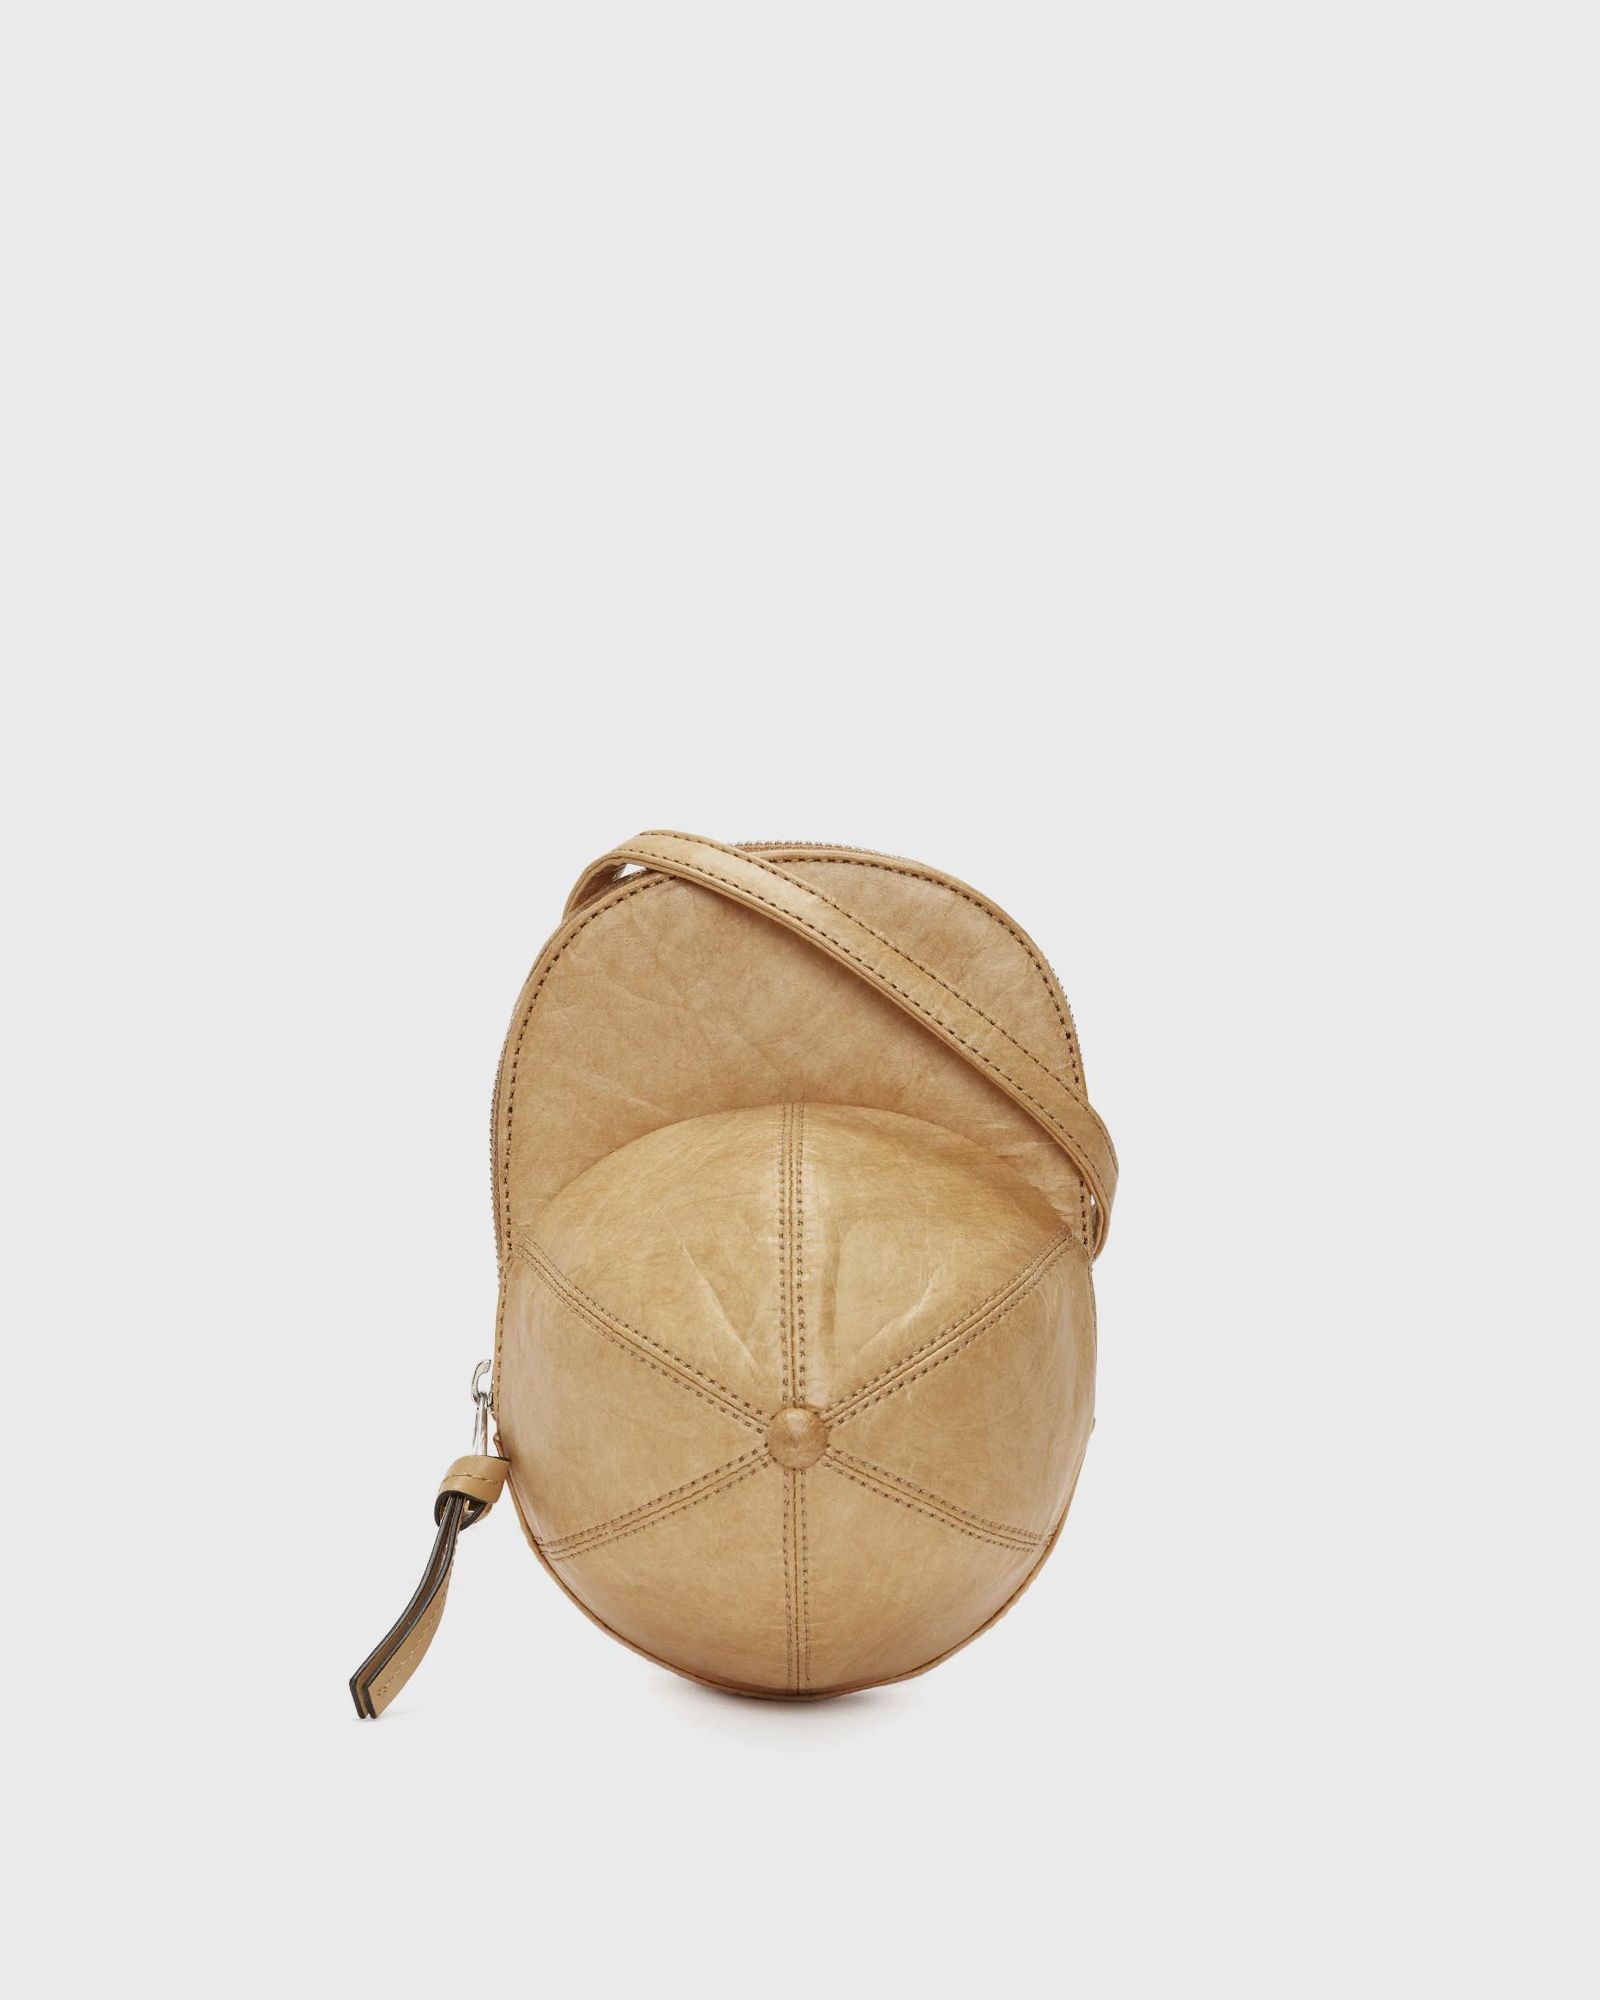 JW Anderson - nano cap bag men messenger & crossbody bags brown in größe:one size